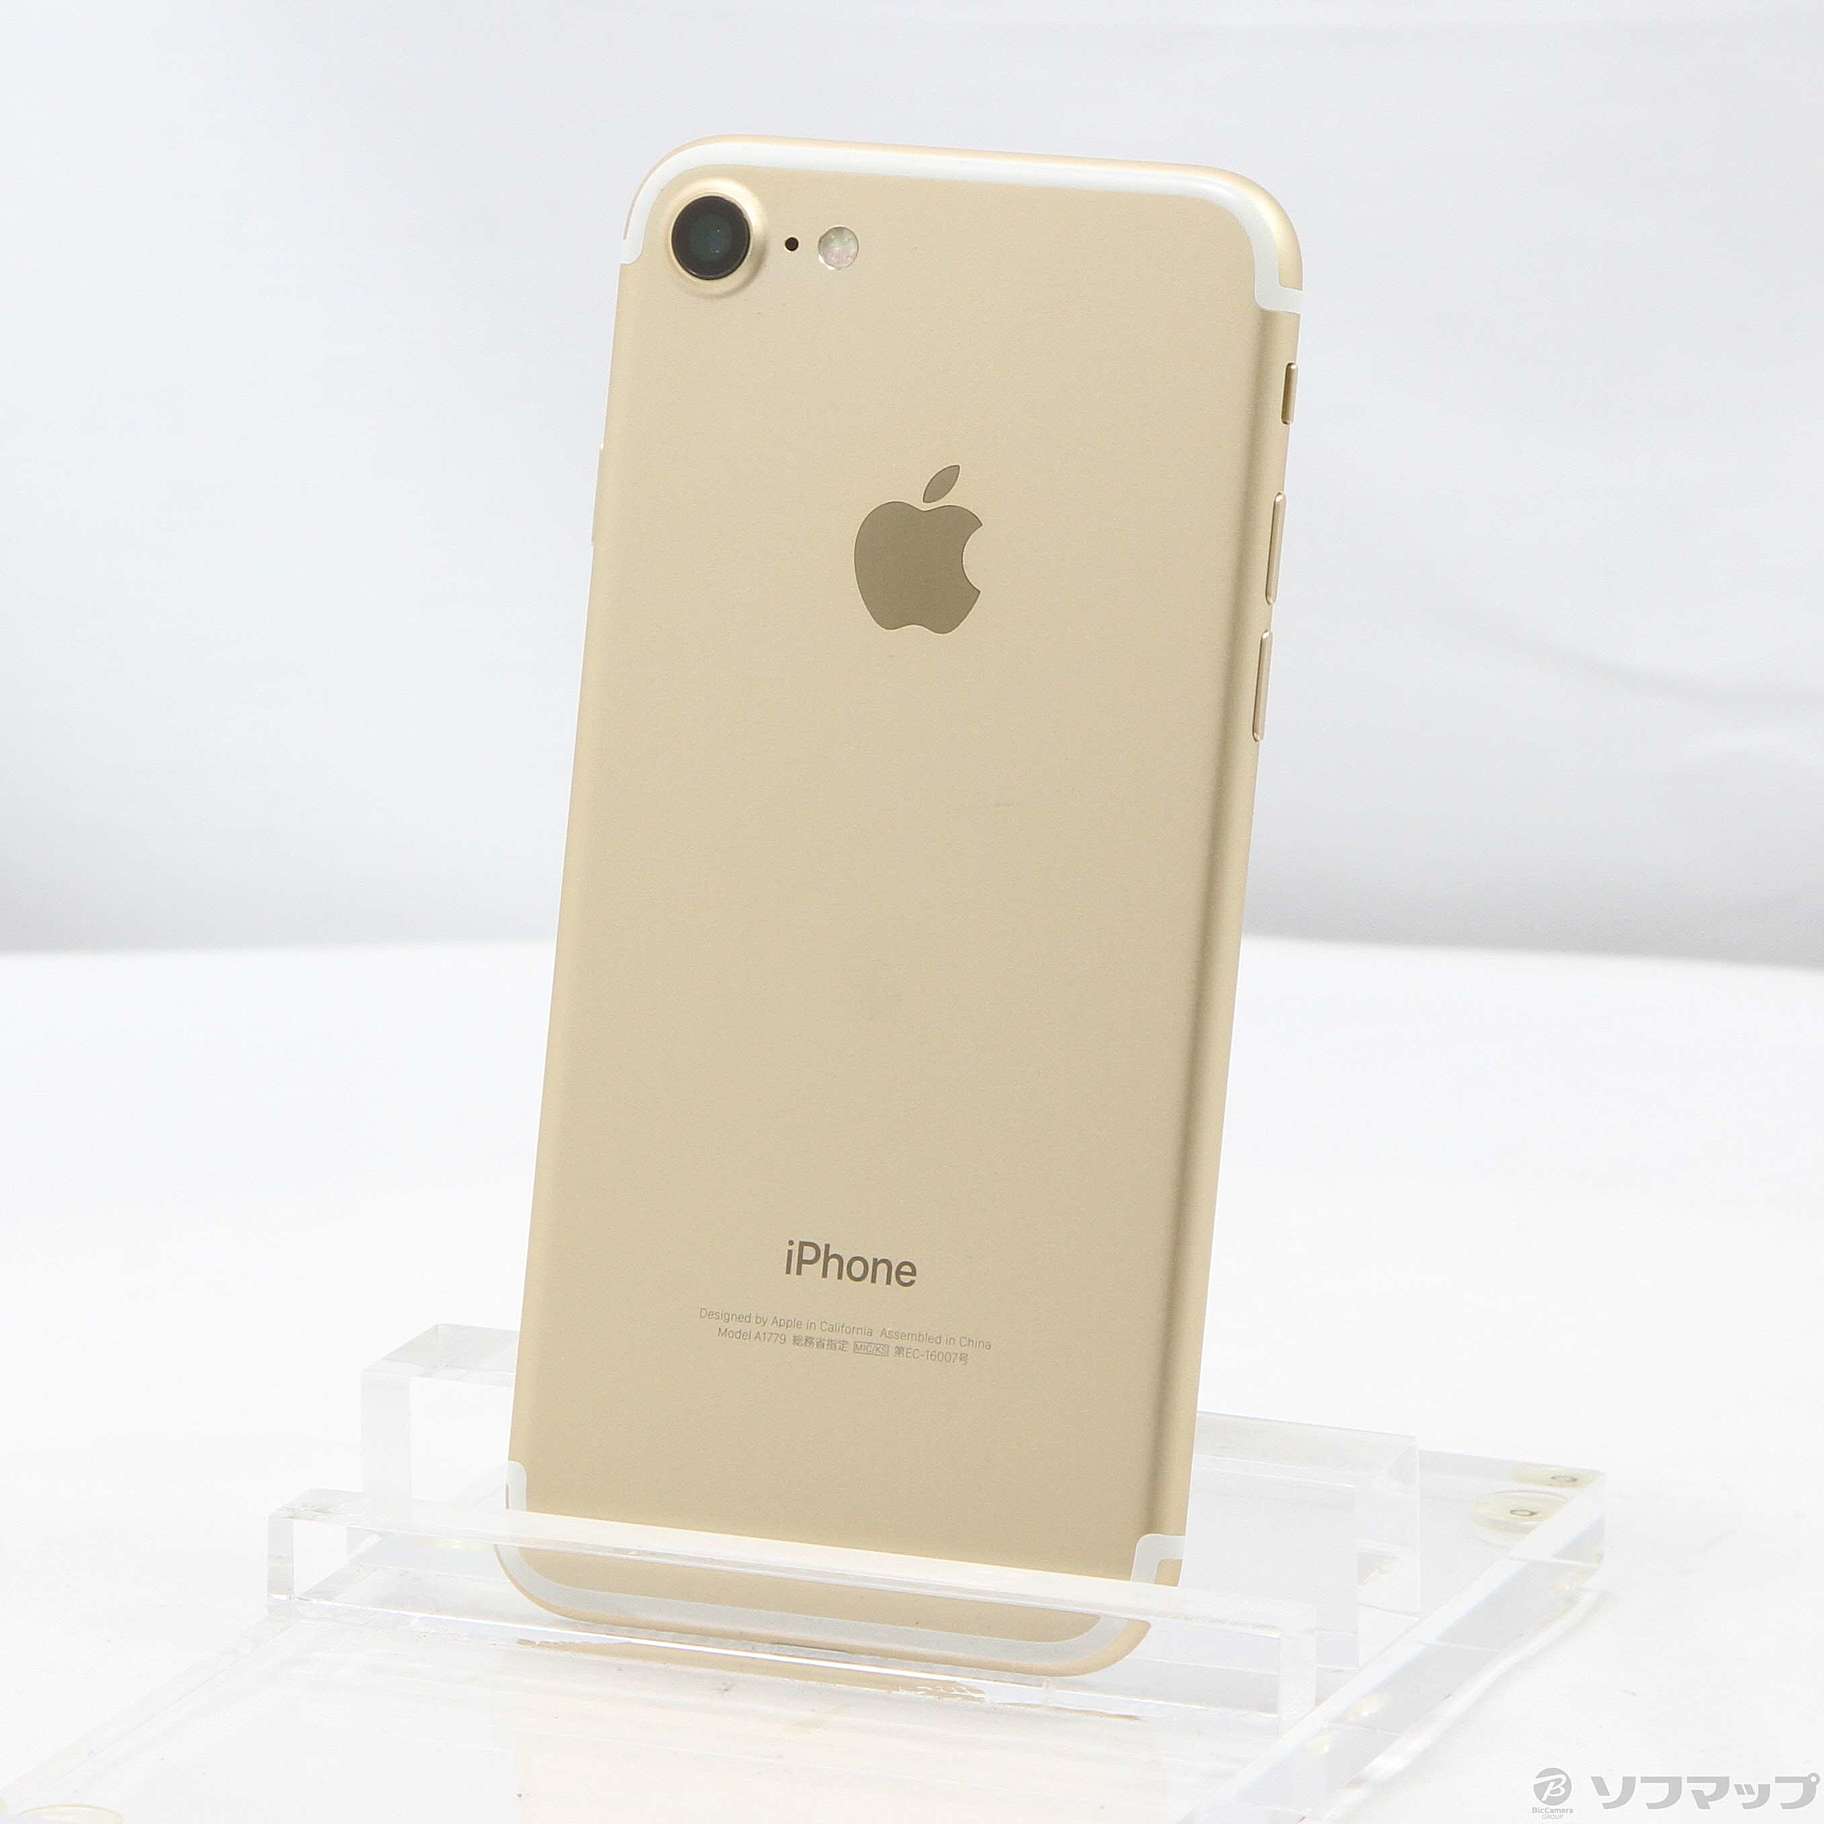 SALE／72%OFF】-Apple(アップル) iPhone7 128GB ゴールド MNCM2J／A SIMフリー ：ソフマップ中古専•門店 -  lab.comfamiliar.com